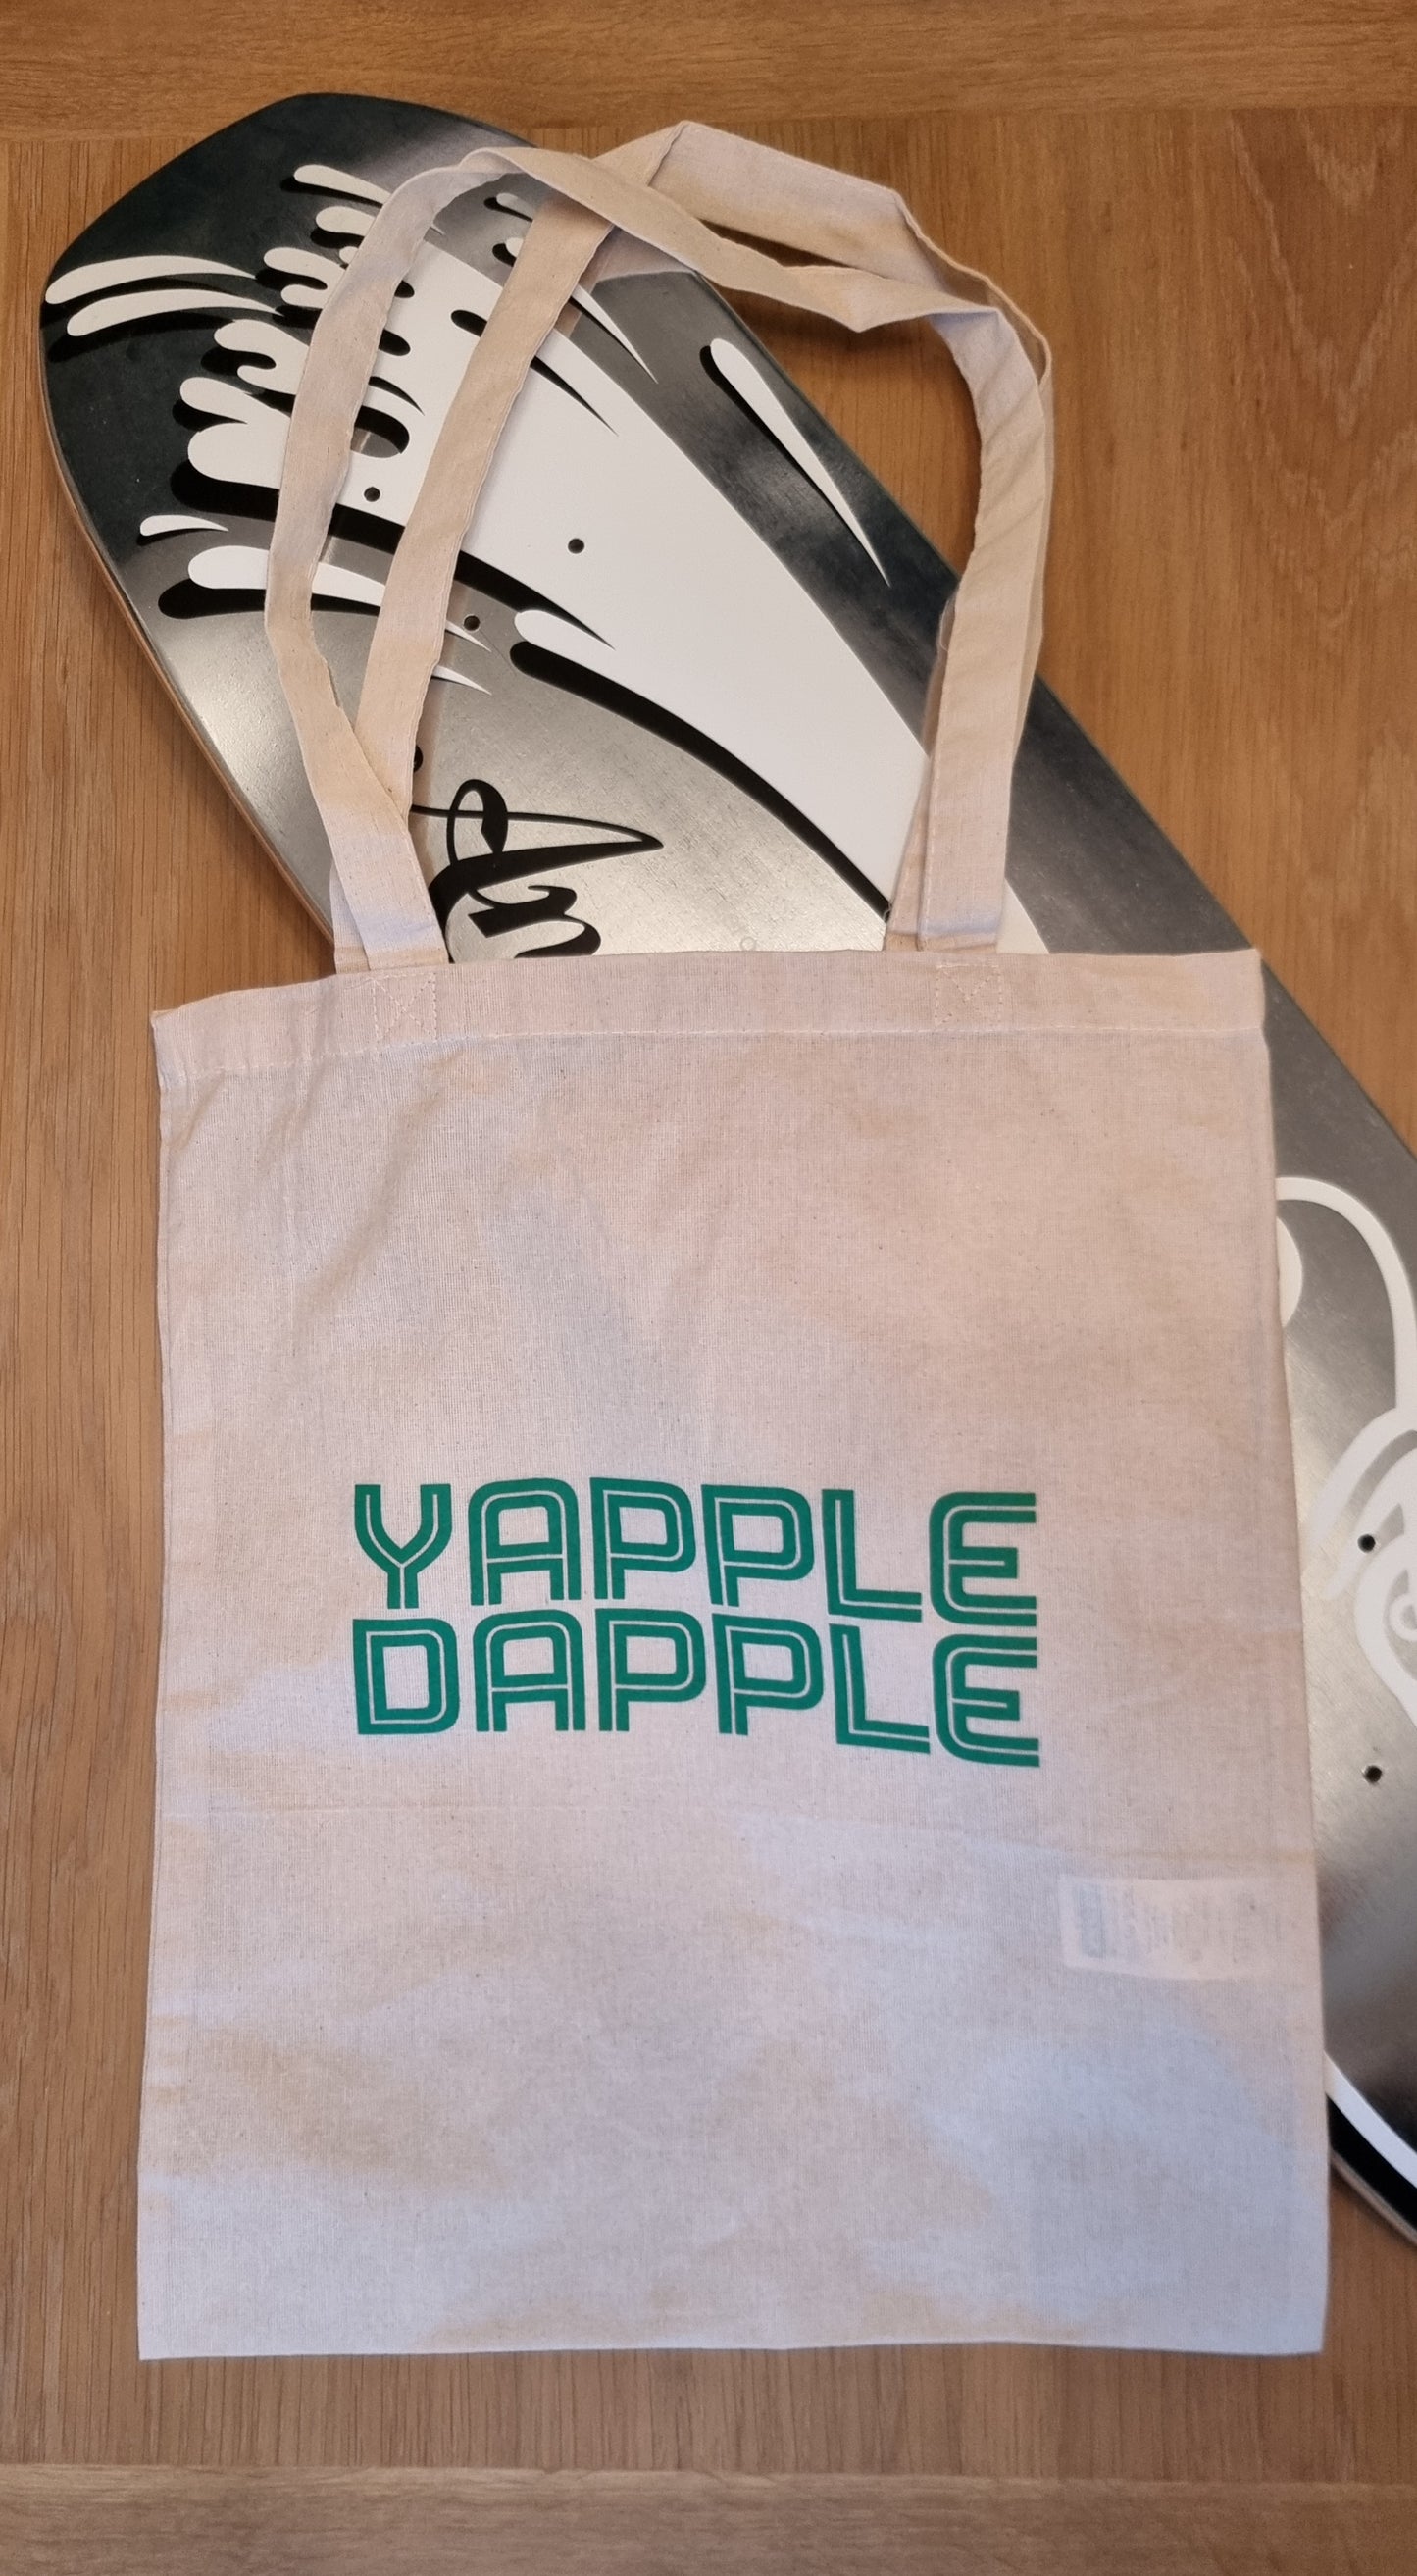 Yapple Dapple Organic Cotton Tote bag